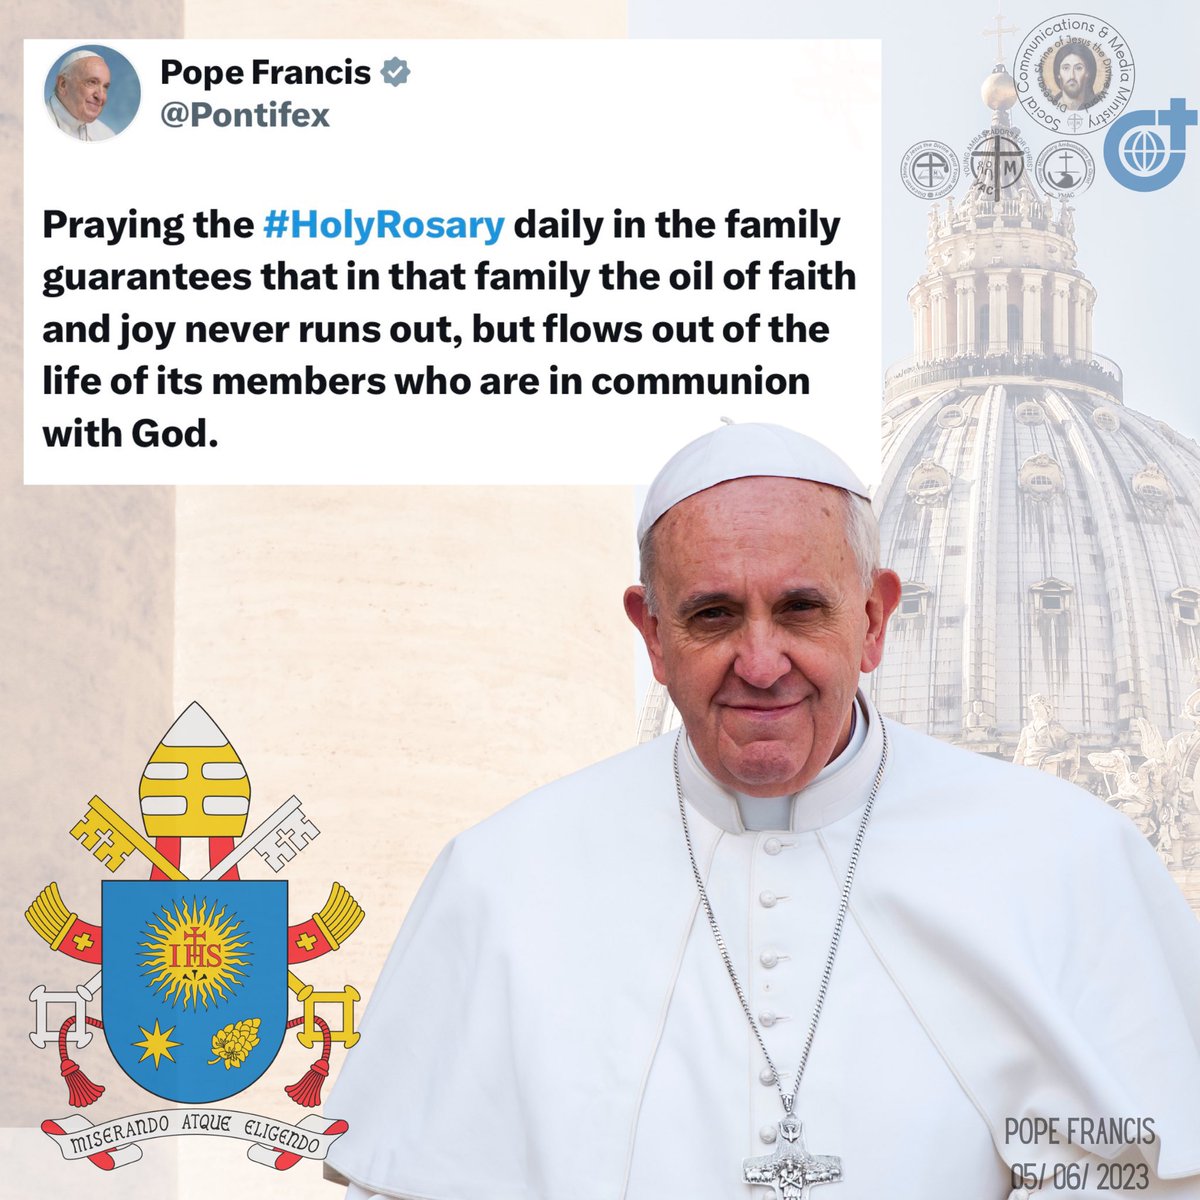 (His Holiness, Pope Francis - Saturday, May 06, 2023)

#HolyFatherTweets #PopeFrancisTwitterTweets
#PapalTweets #PontifexTweets #SVD #DSJDW #CtKMS  #YAC #YMAC #SYM #SVDyouth #PrayTheRosaryDaily(ctto)